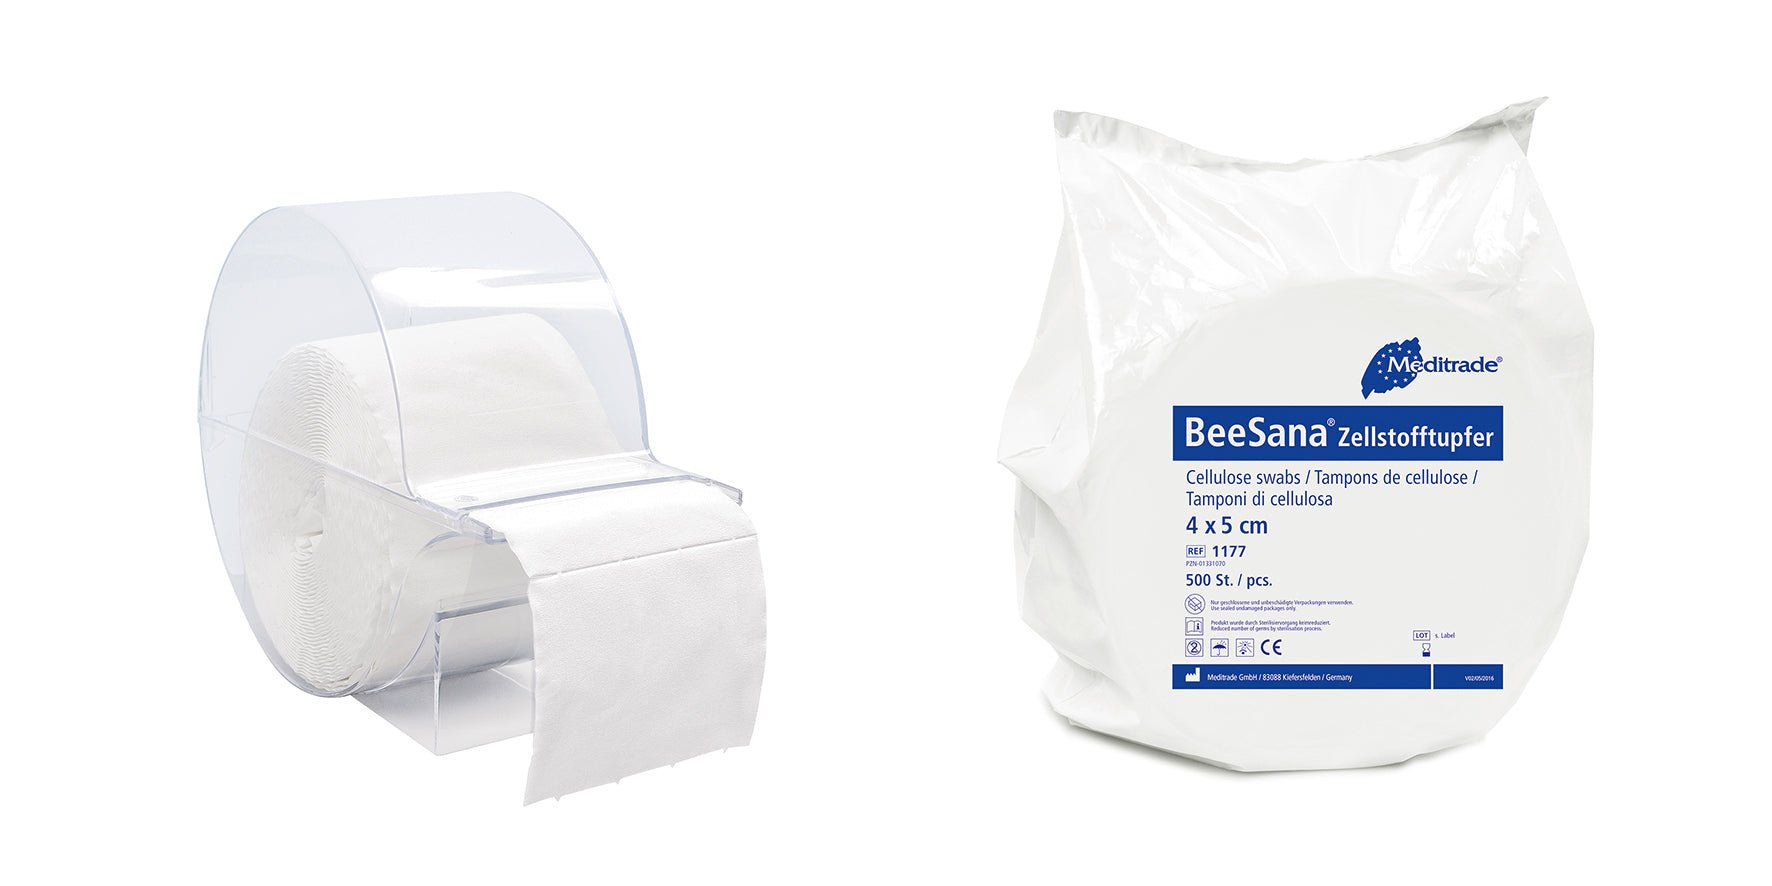 BeeSana® Zellstofftupfer